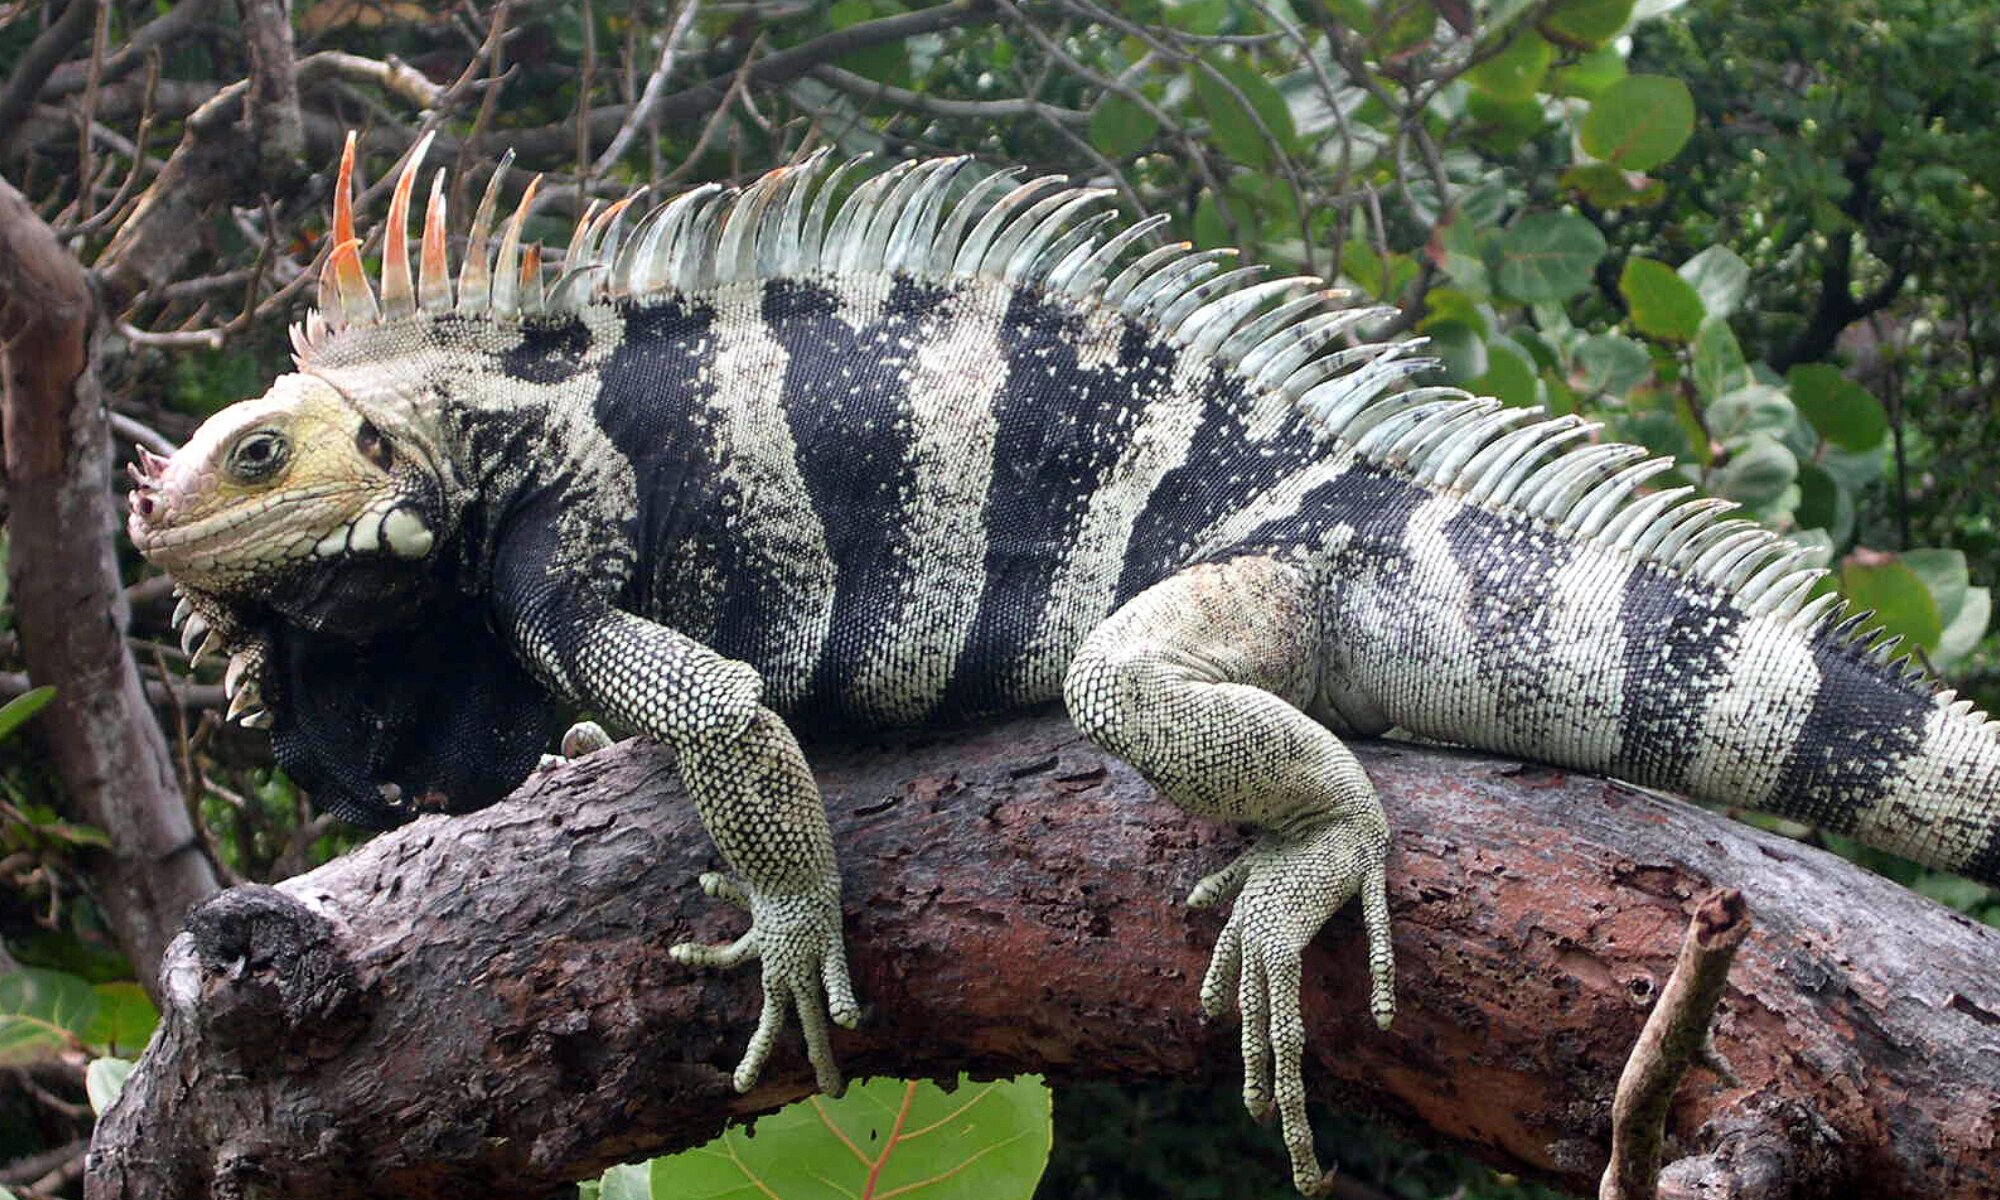 New iguana species found hiding in plain sight